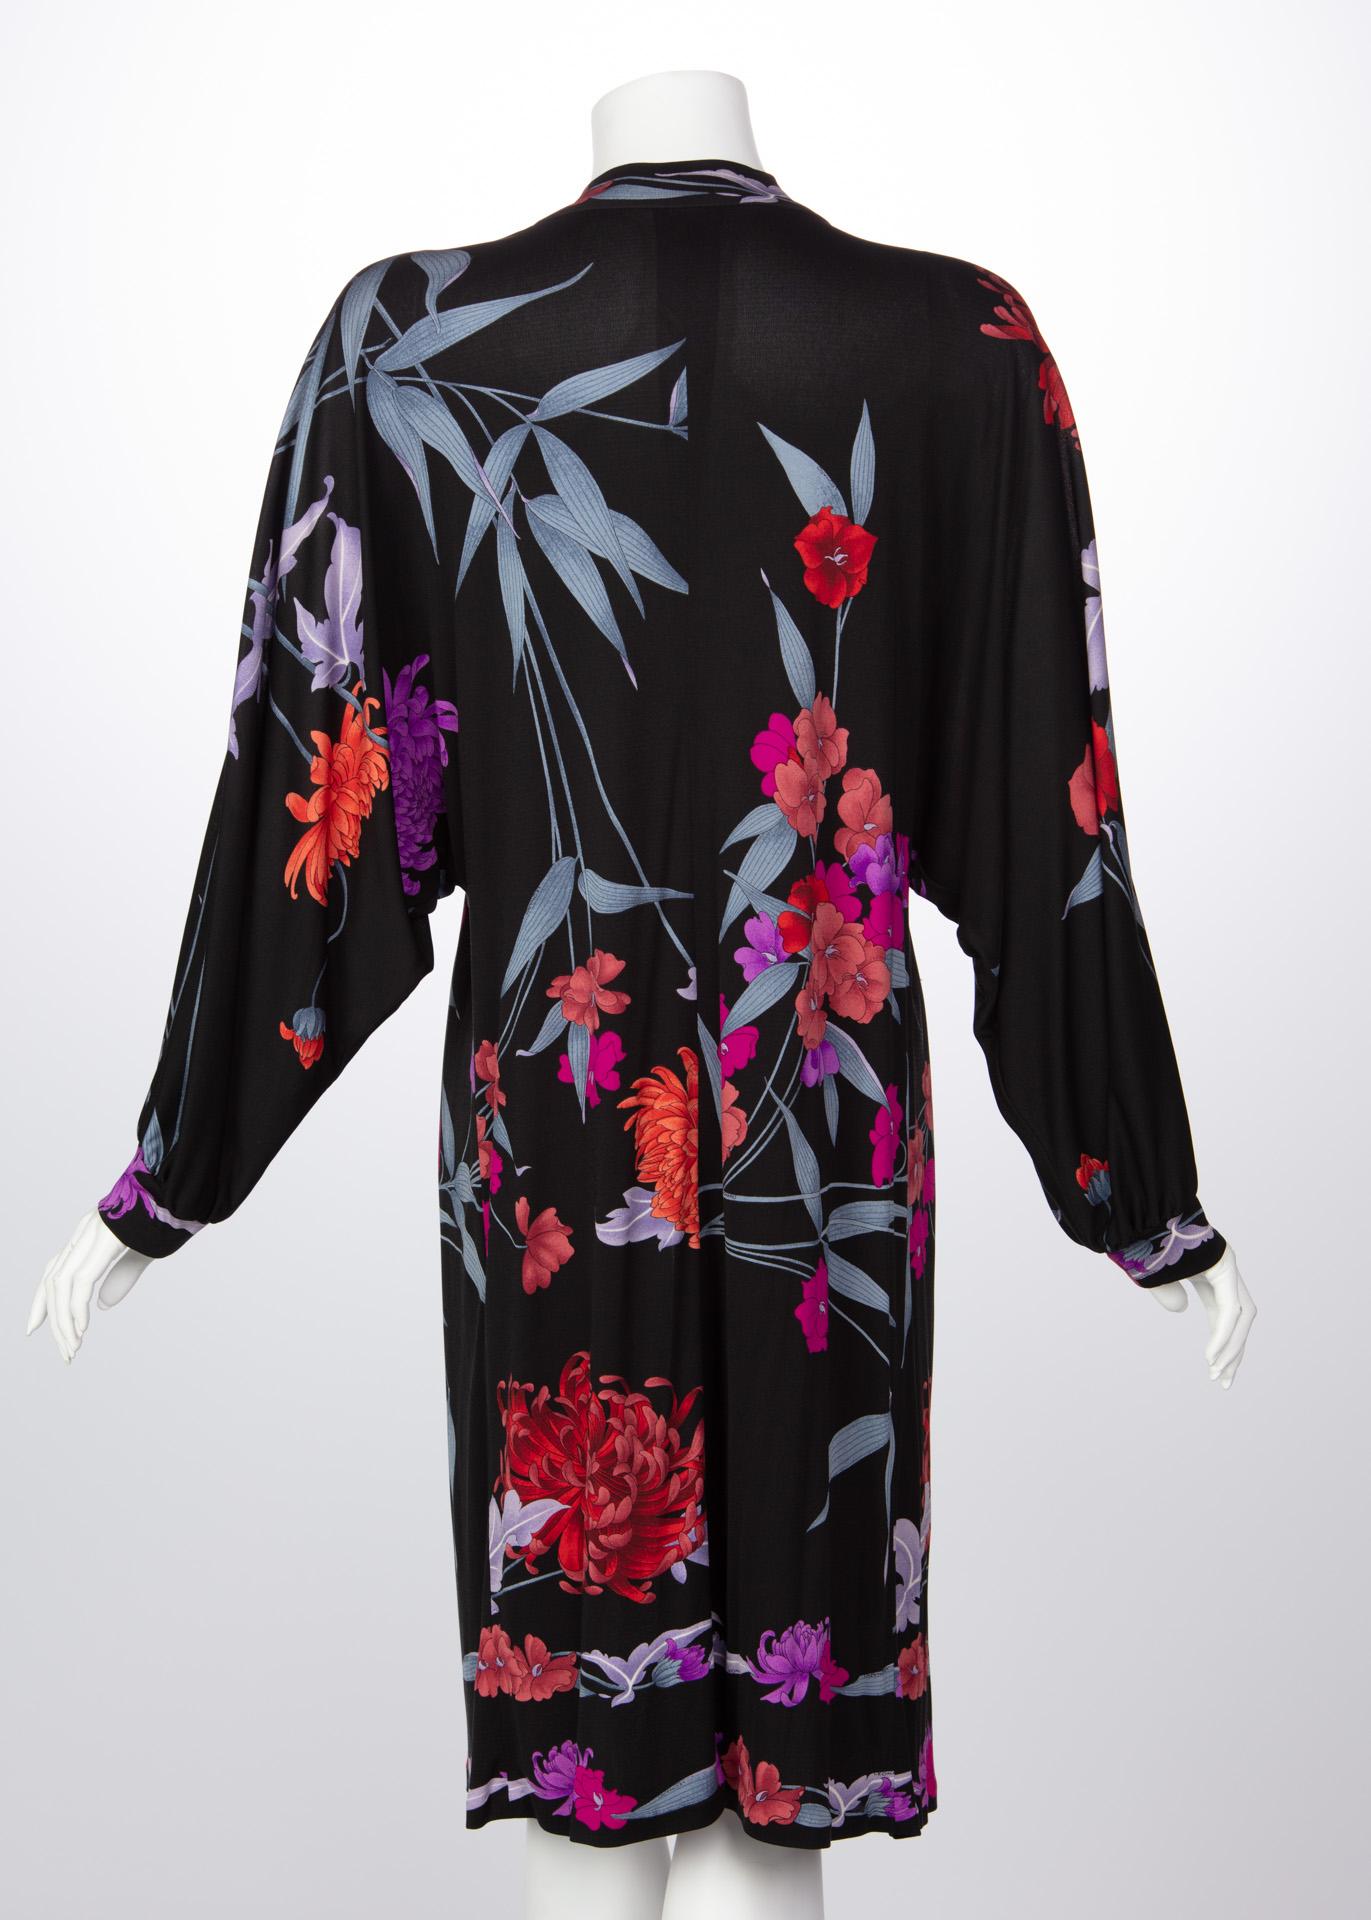 1970s Leonard Paris Floral Silk Jersey Dress Jacket For Sale 2